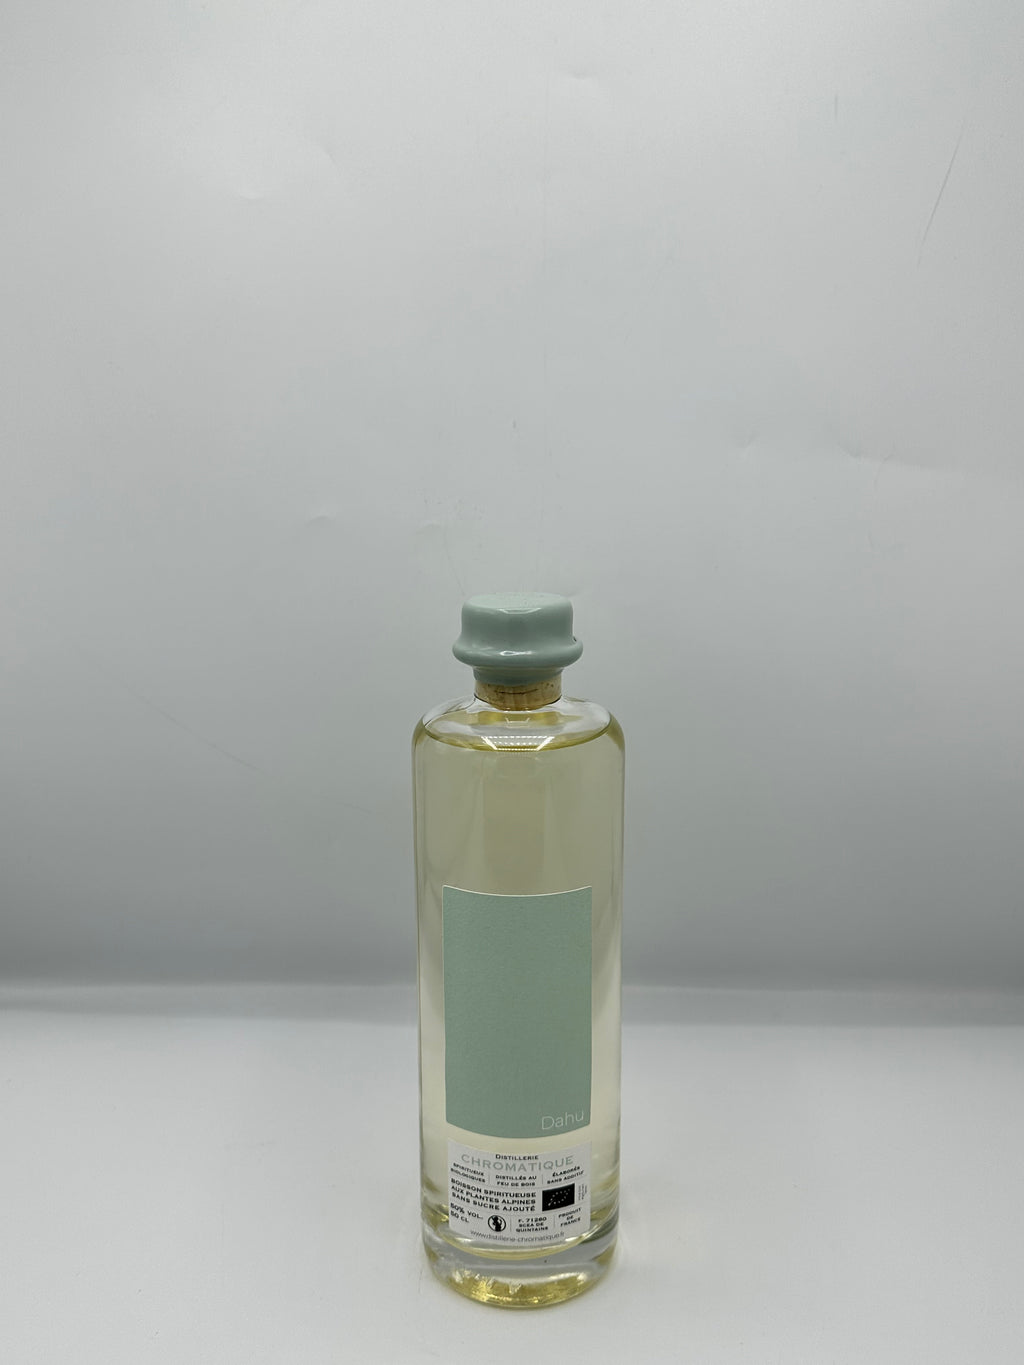 Eau de Vie d'Absinthe "DAHU" 50° 50Cl - Distillerie Chromatique by Guillemot Michel